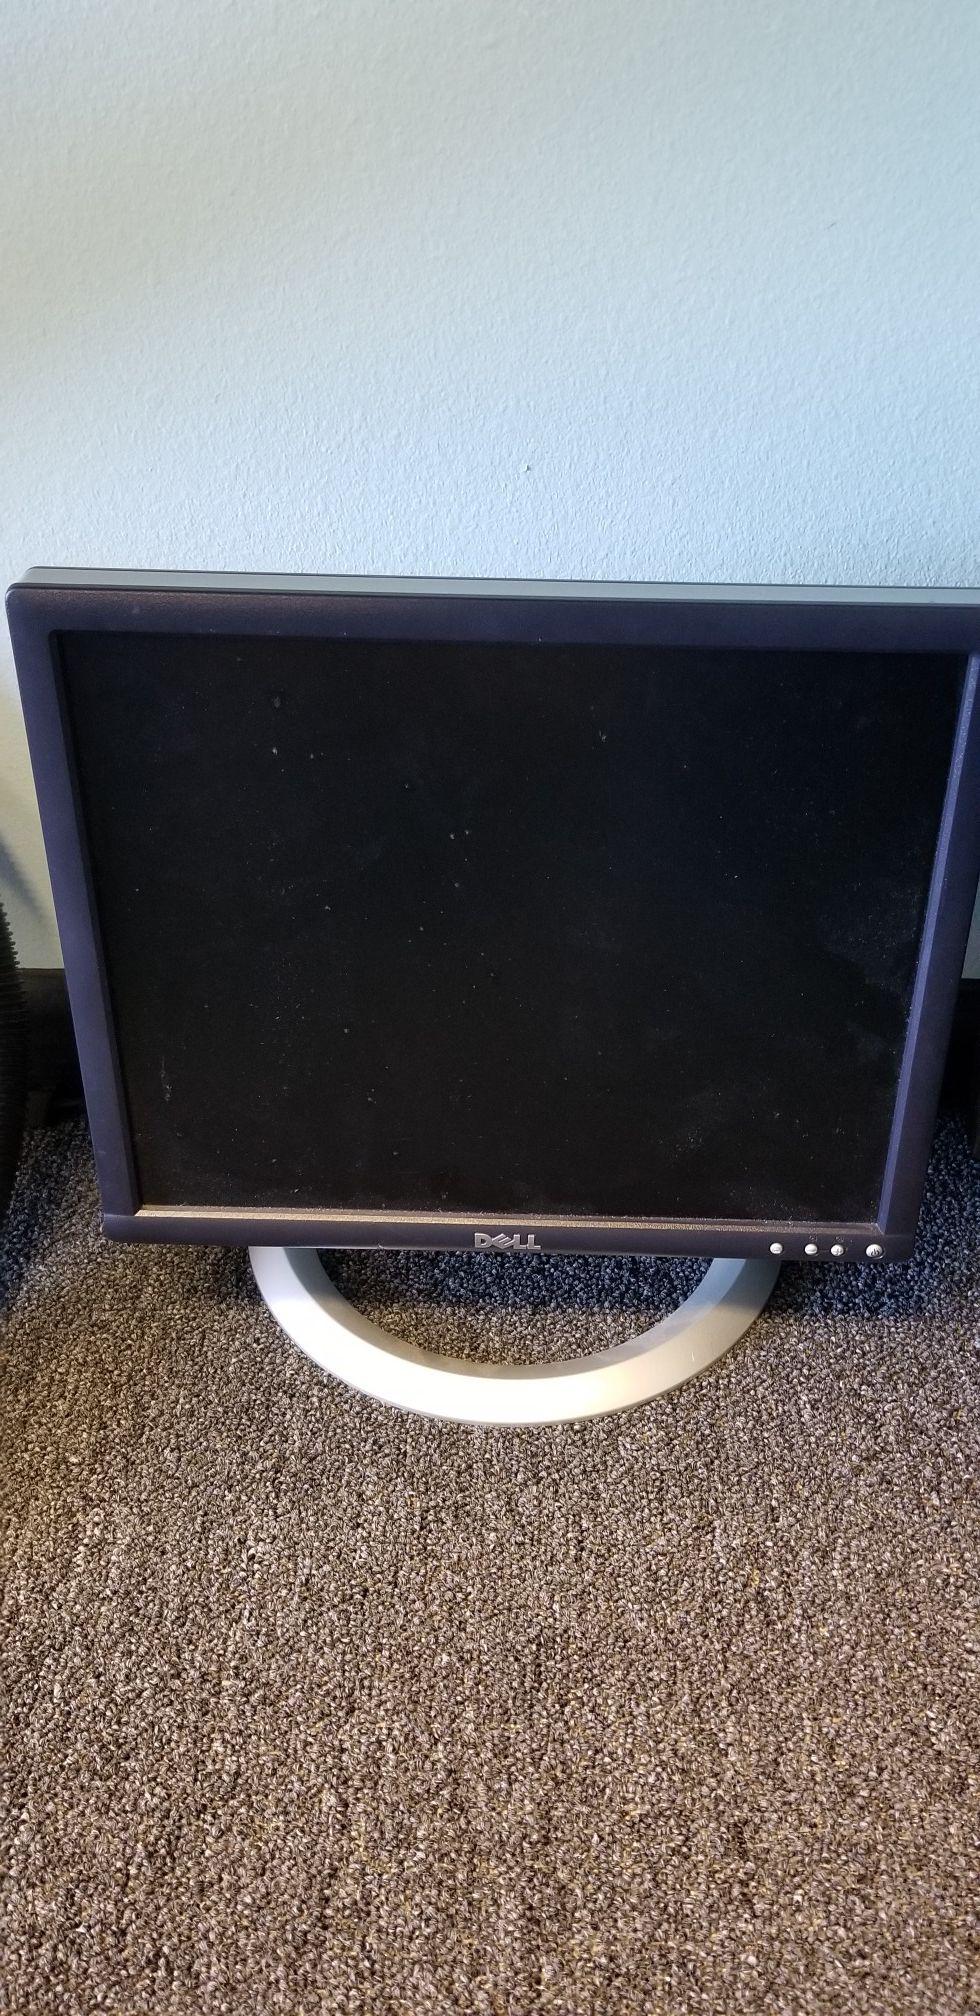 Dell 17 inch monitor lcd pc computer screen